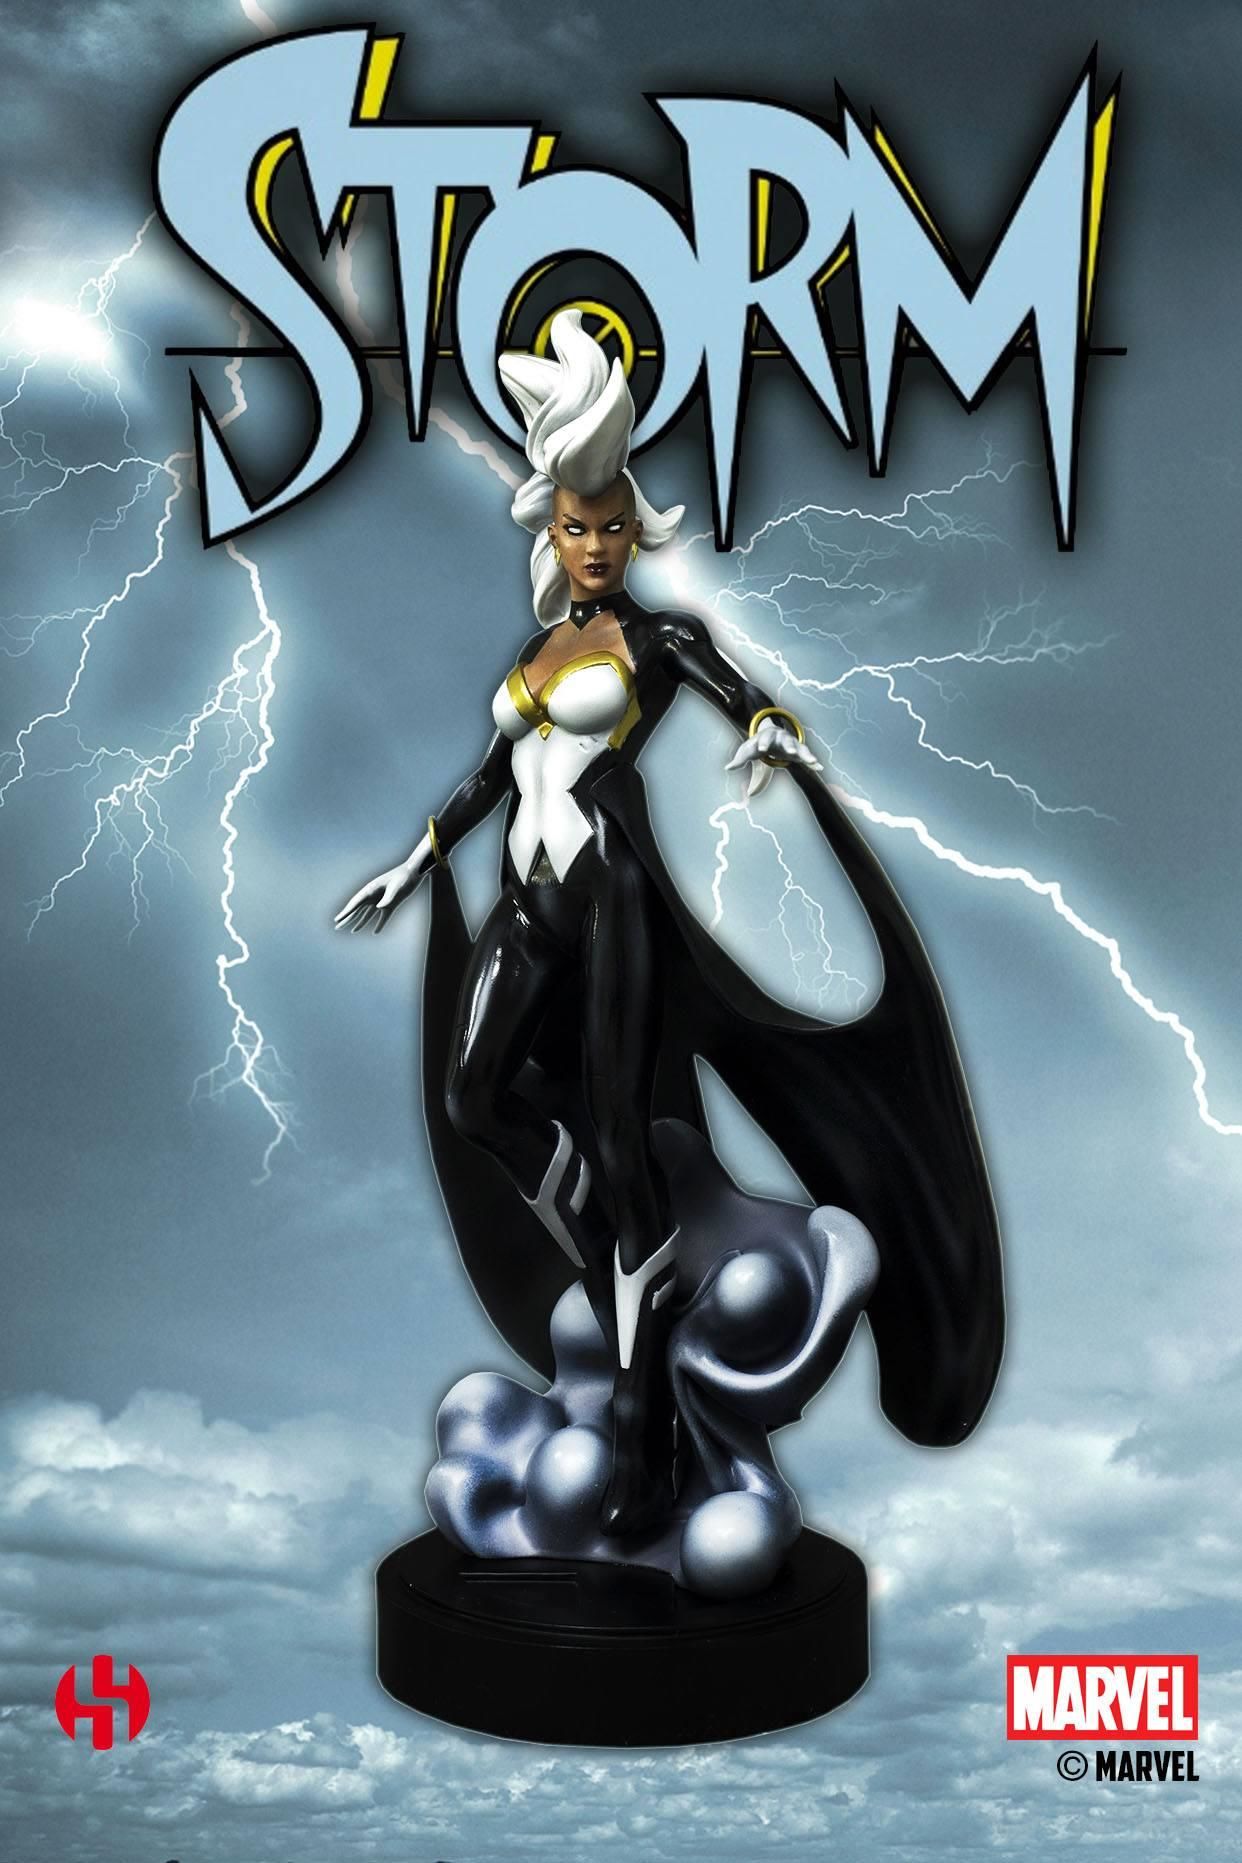 Marvel - Statue Storm Uncanny X-Force Ver.